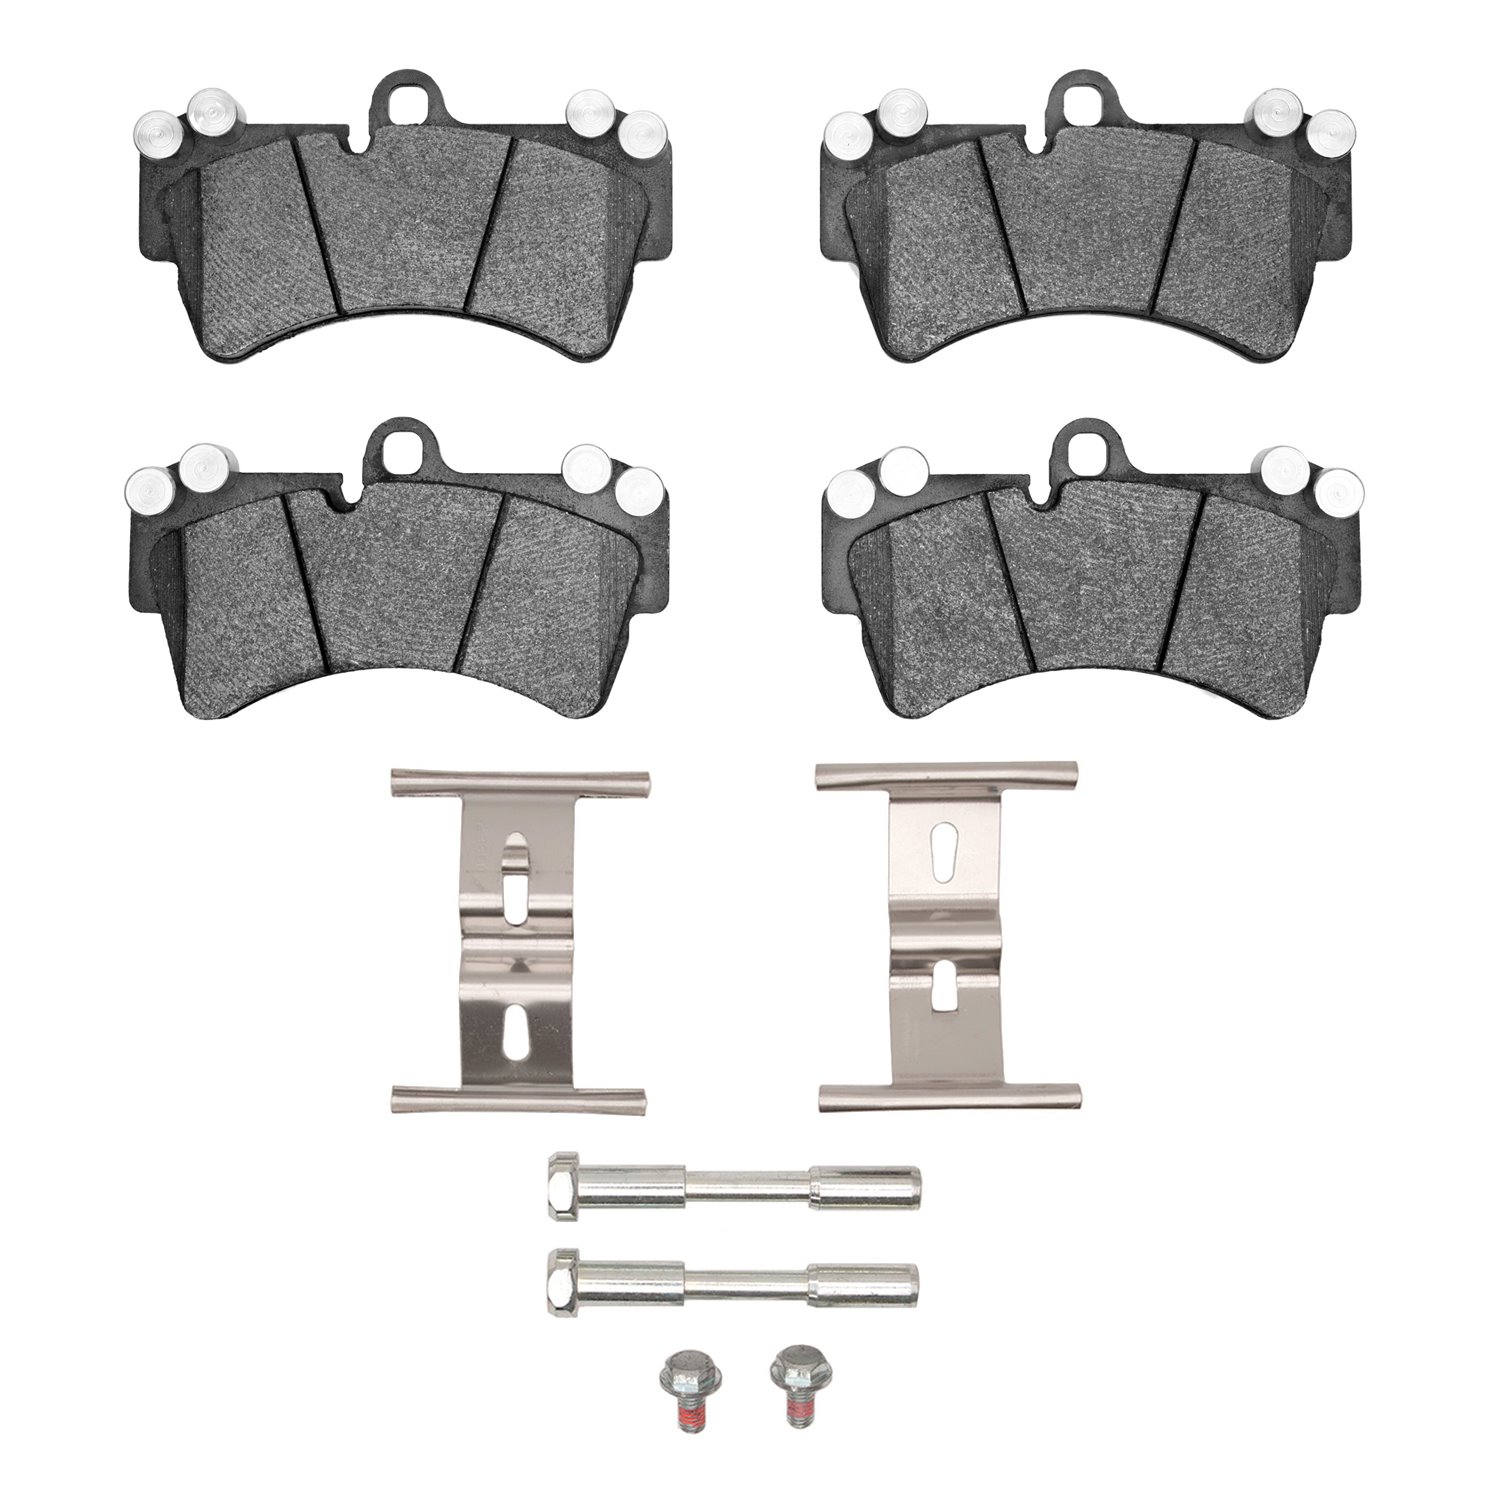 1310-0977-01 3000-Series Ceramic Brake Pads & Hardware Kit, 2003-2015 Multiple Makes/Models, Position: Front